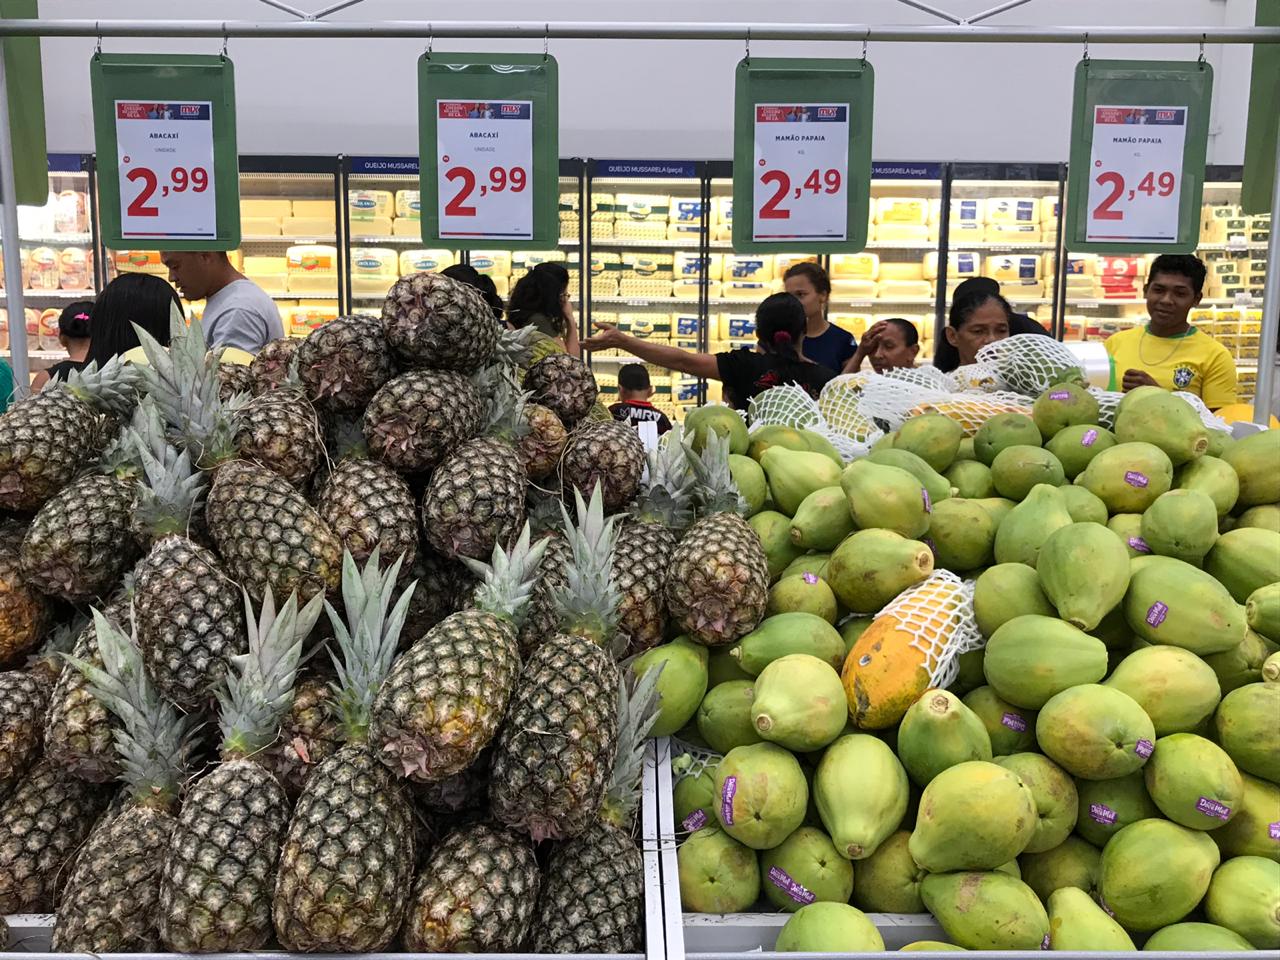 Frutas no supermercado